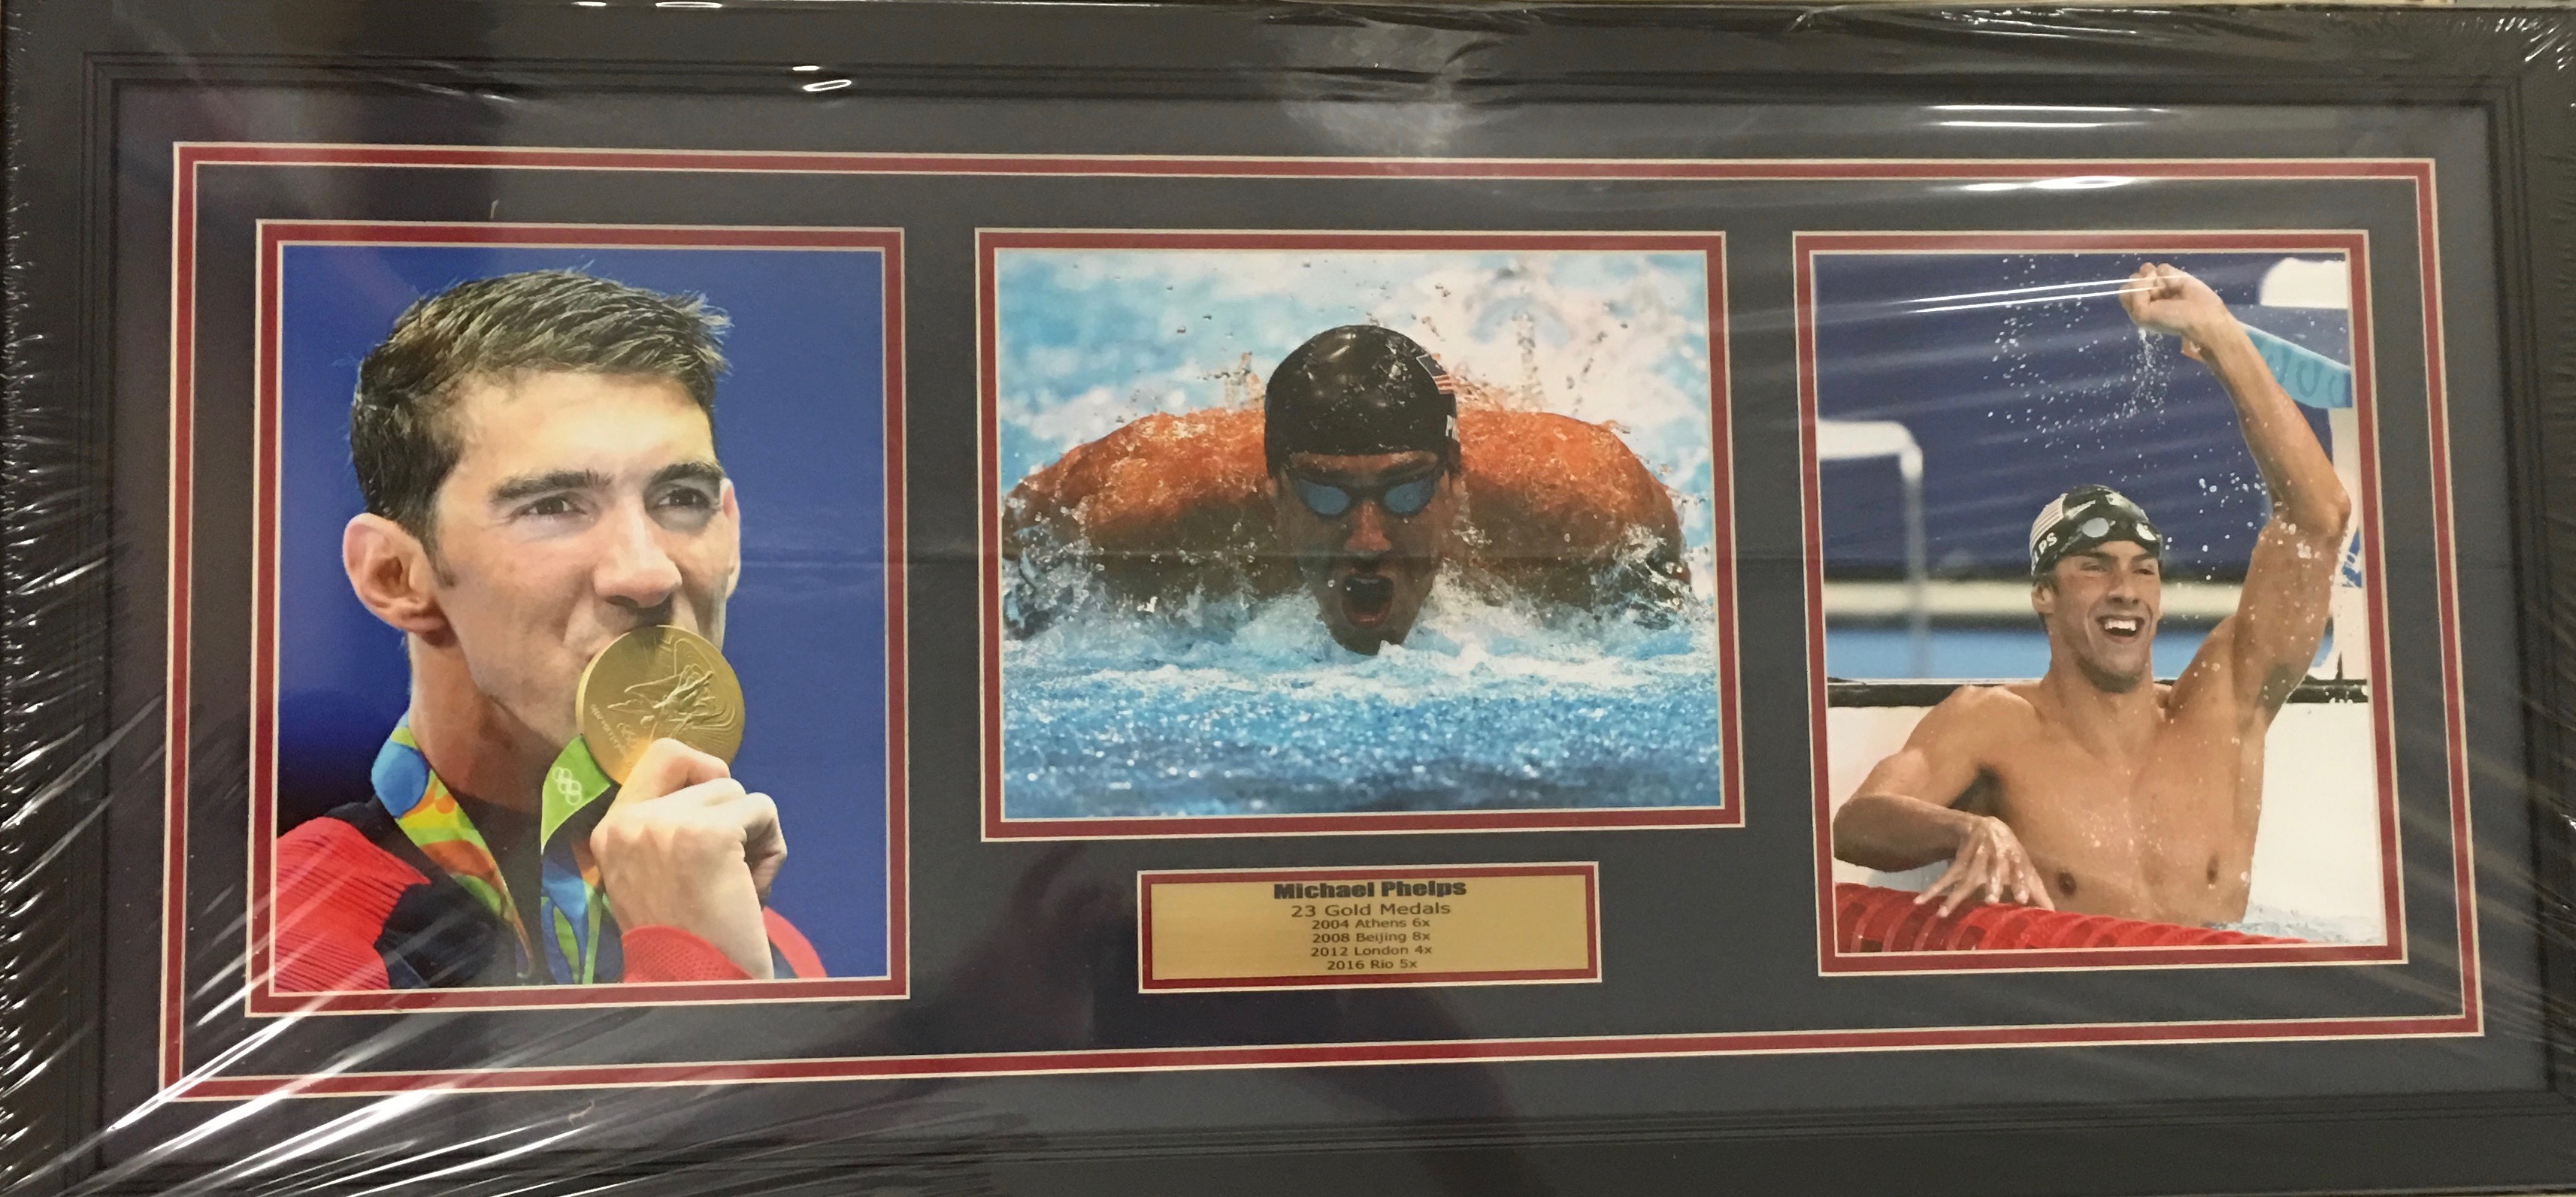 Michael Phelps Collage